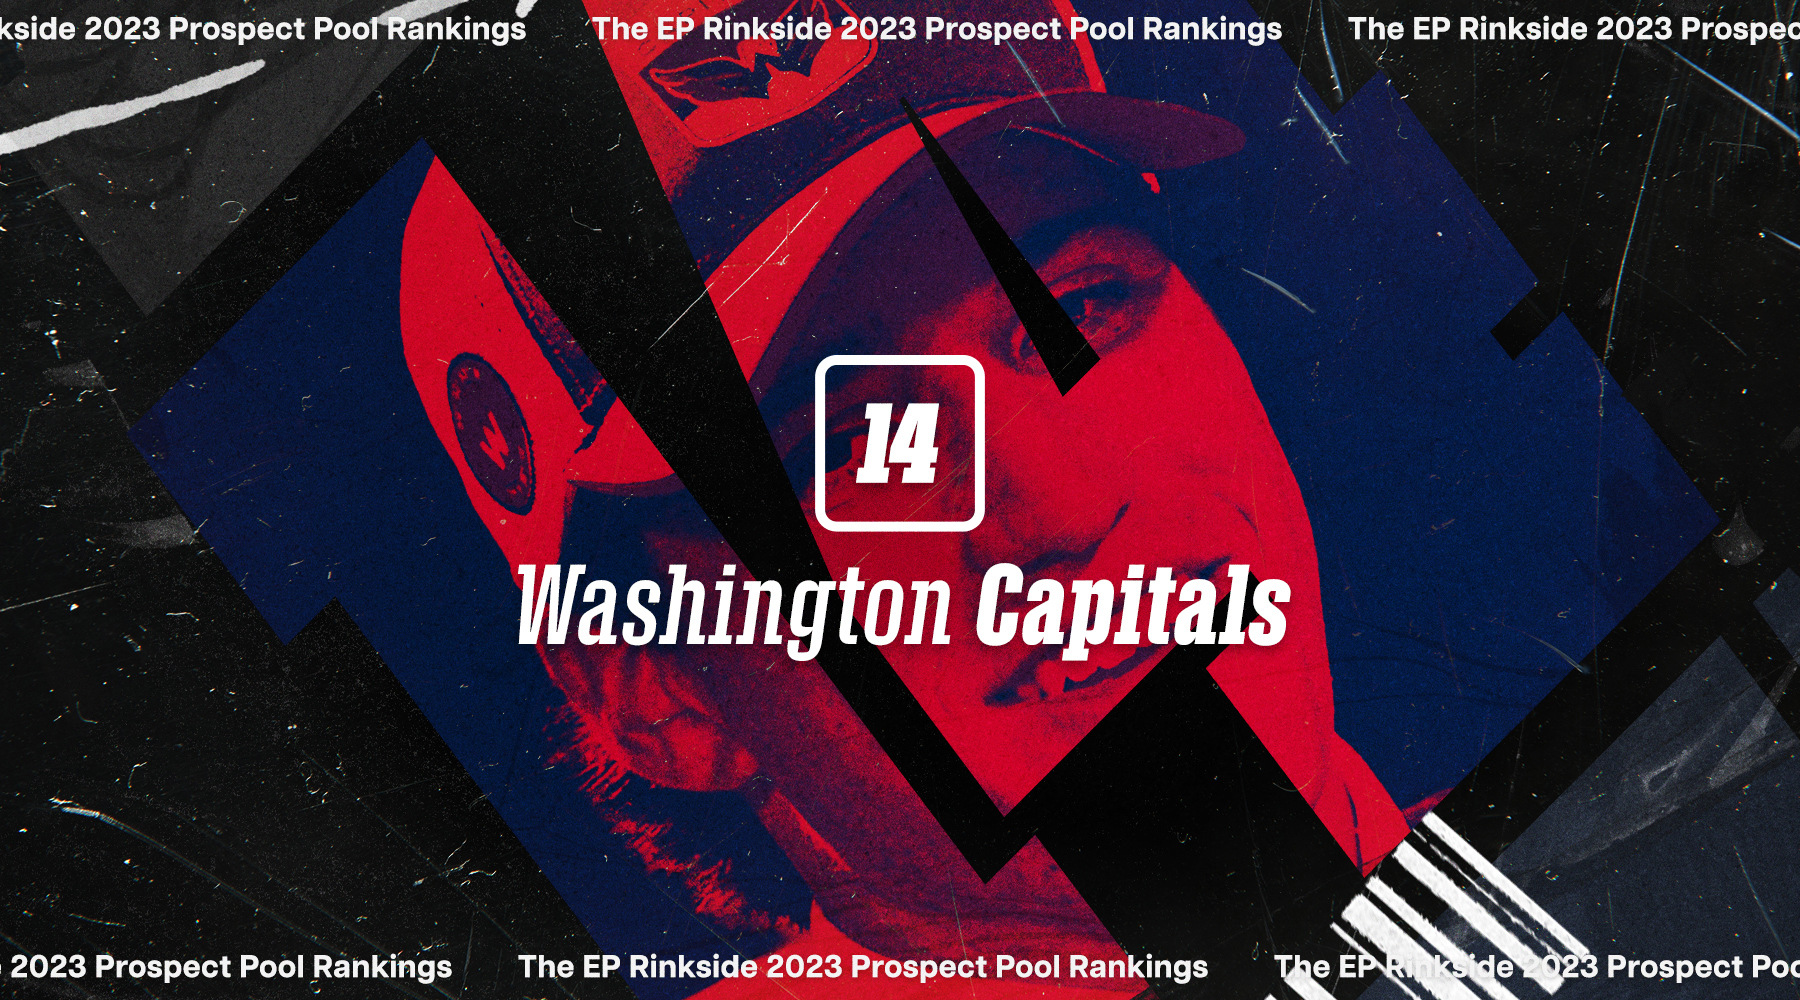 EP Rinkside 2023 NHL Prospect Pool Rankings: No. 14-ranked Washington Capitals